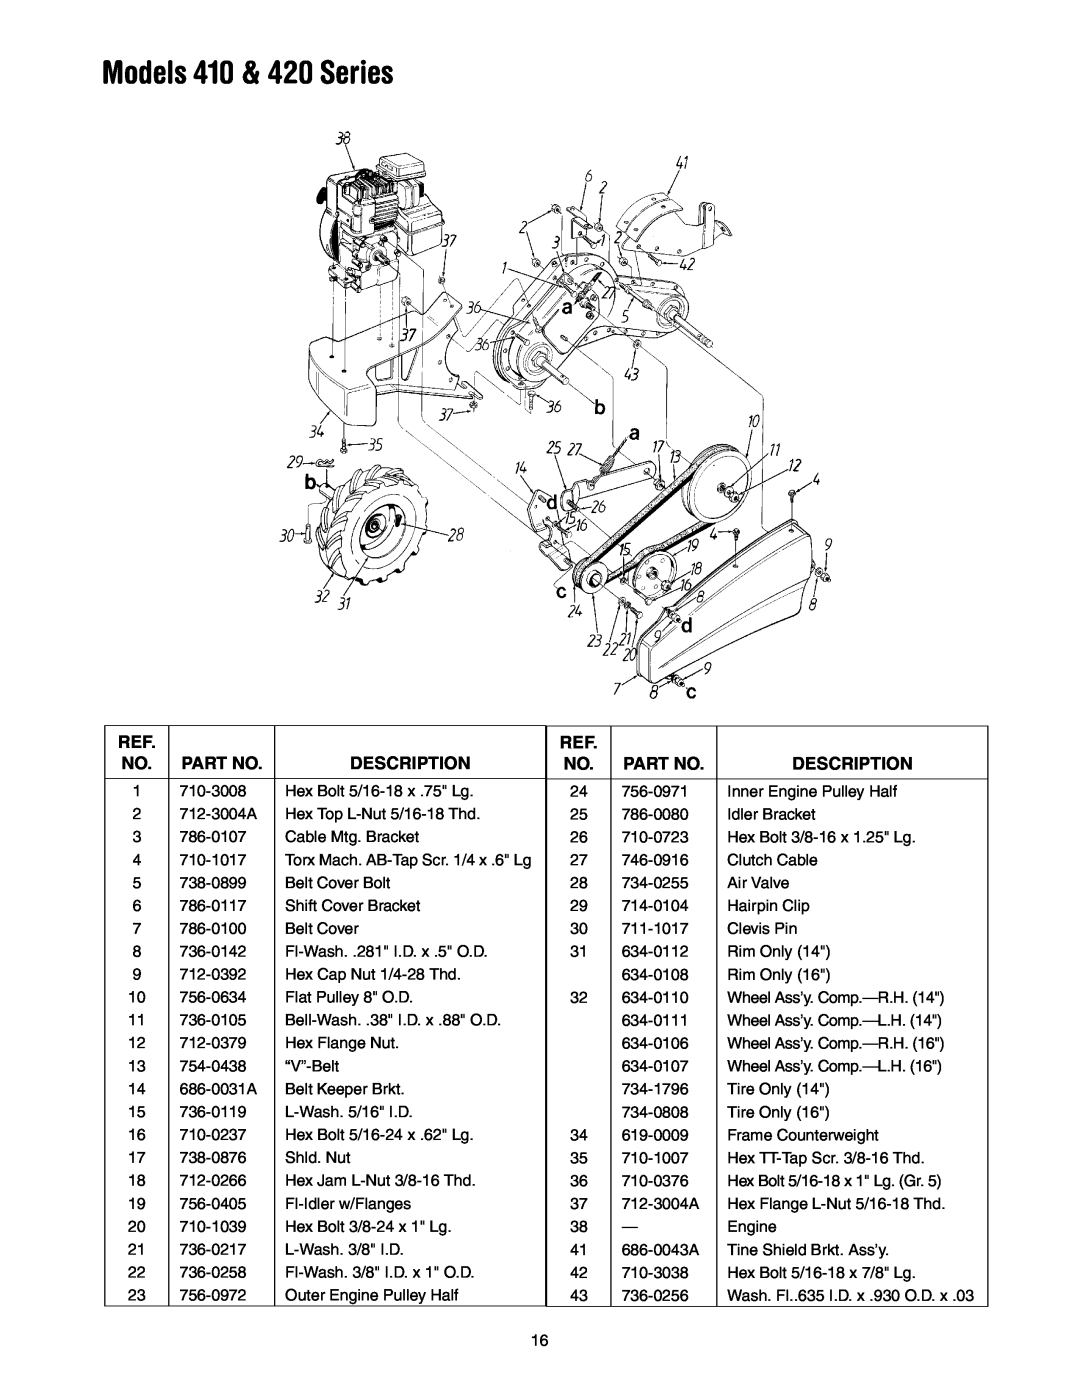 MTD 410 Thru 420 manual Models 410 & 420 Series, Description 